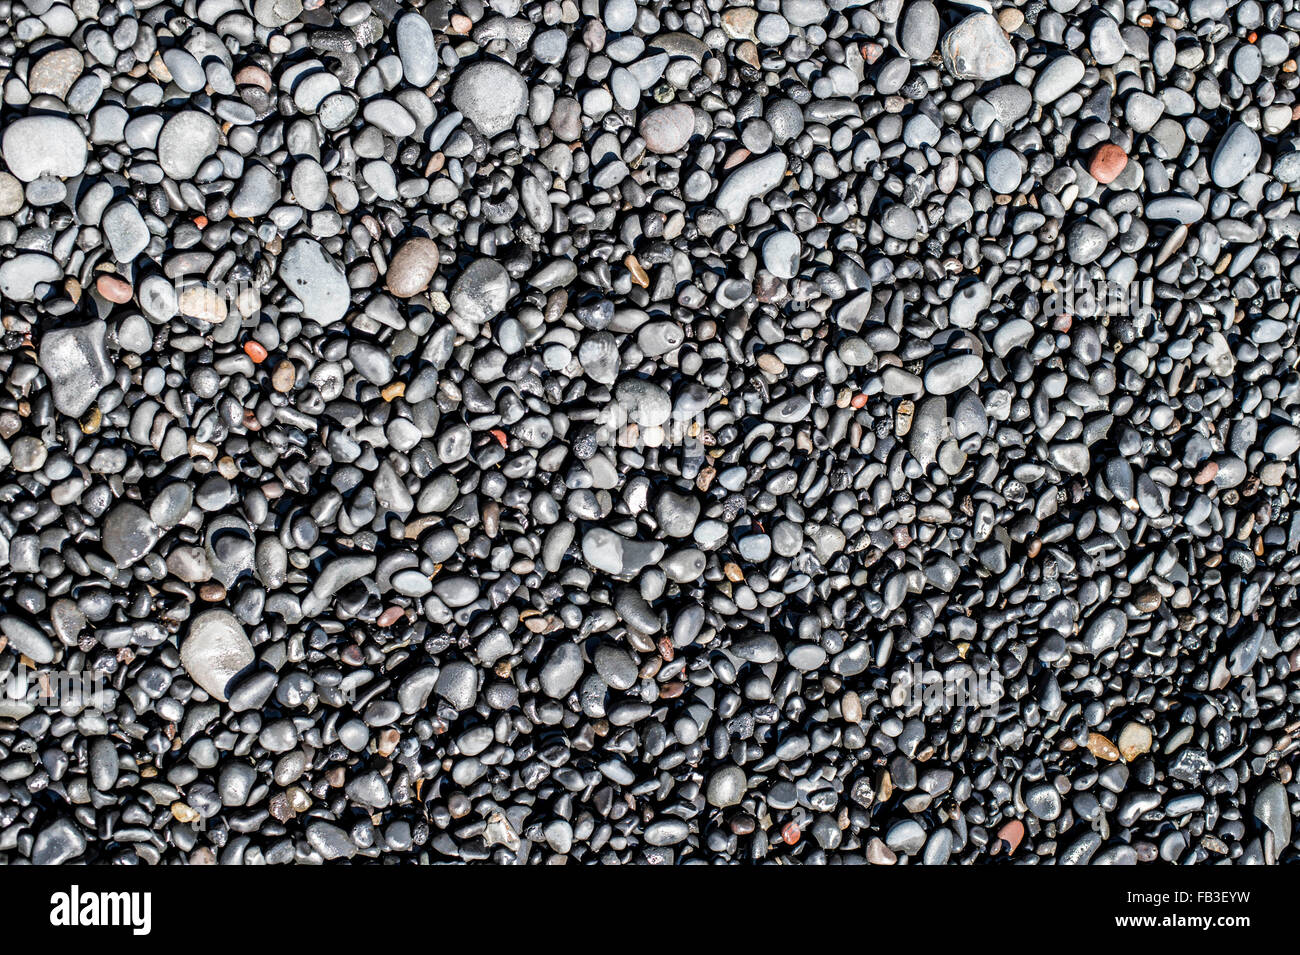 Small basalt rocks that make up the famous black sand beaches along the popular Icelandic coastline near Vik. Stock Photo